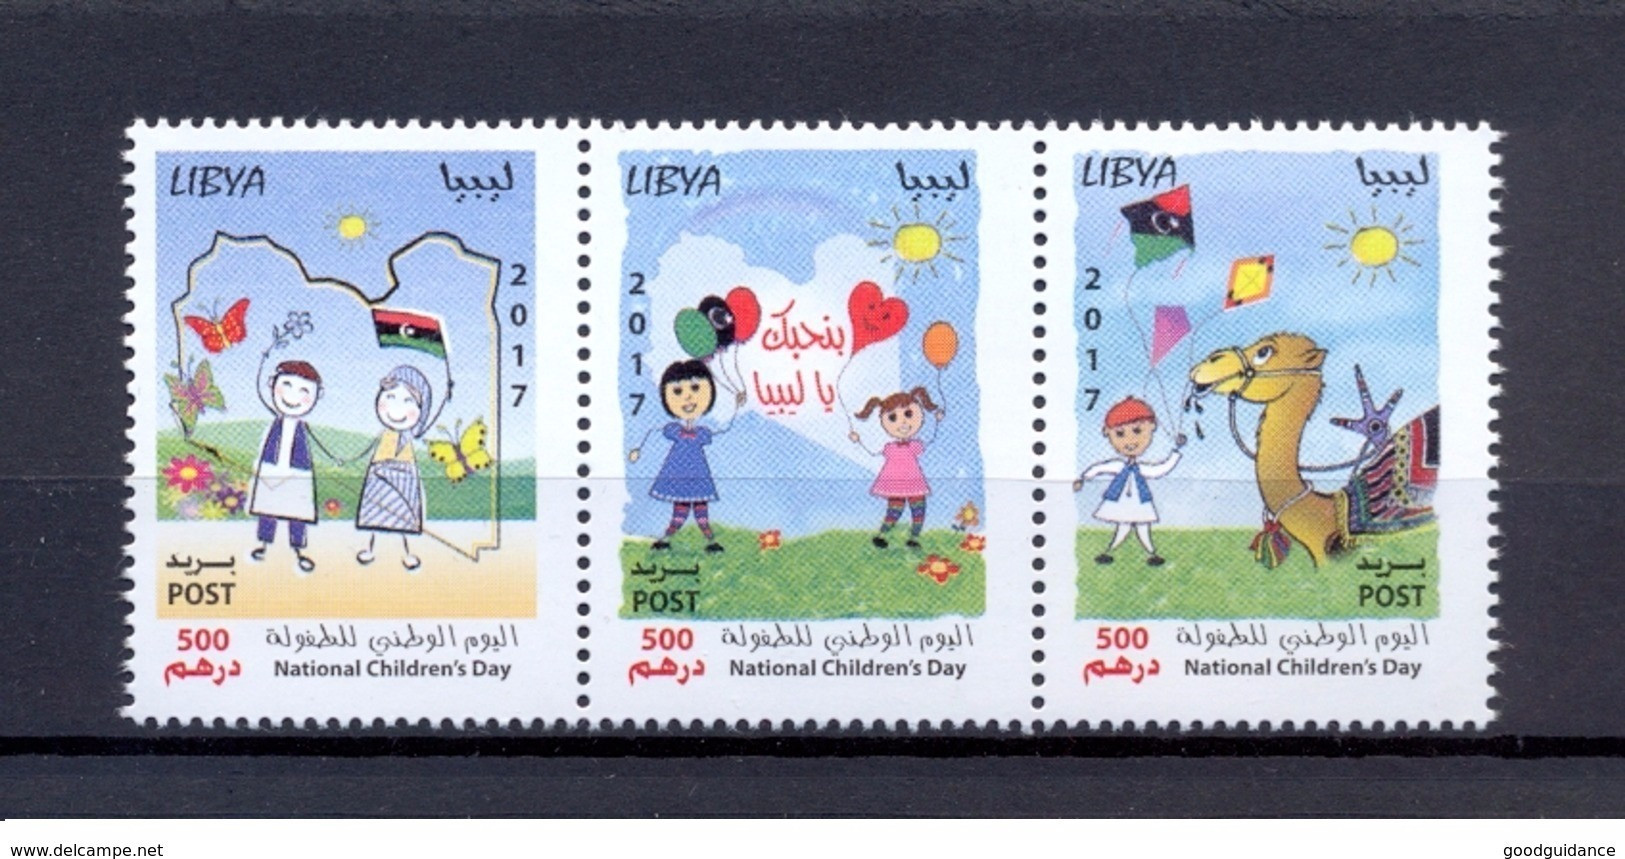 2017- Libya- Libye- National Children's Day - Butterflies, Camel, Flag, Love- Strip Of 3 Stamps- MNH** - Libië